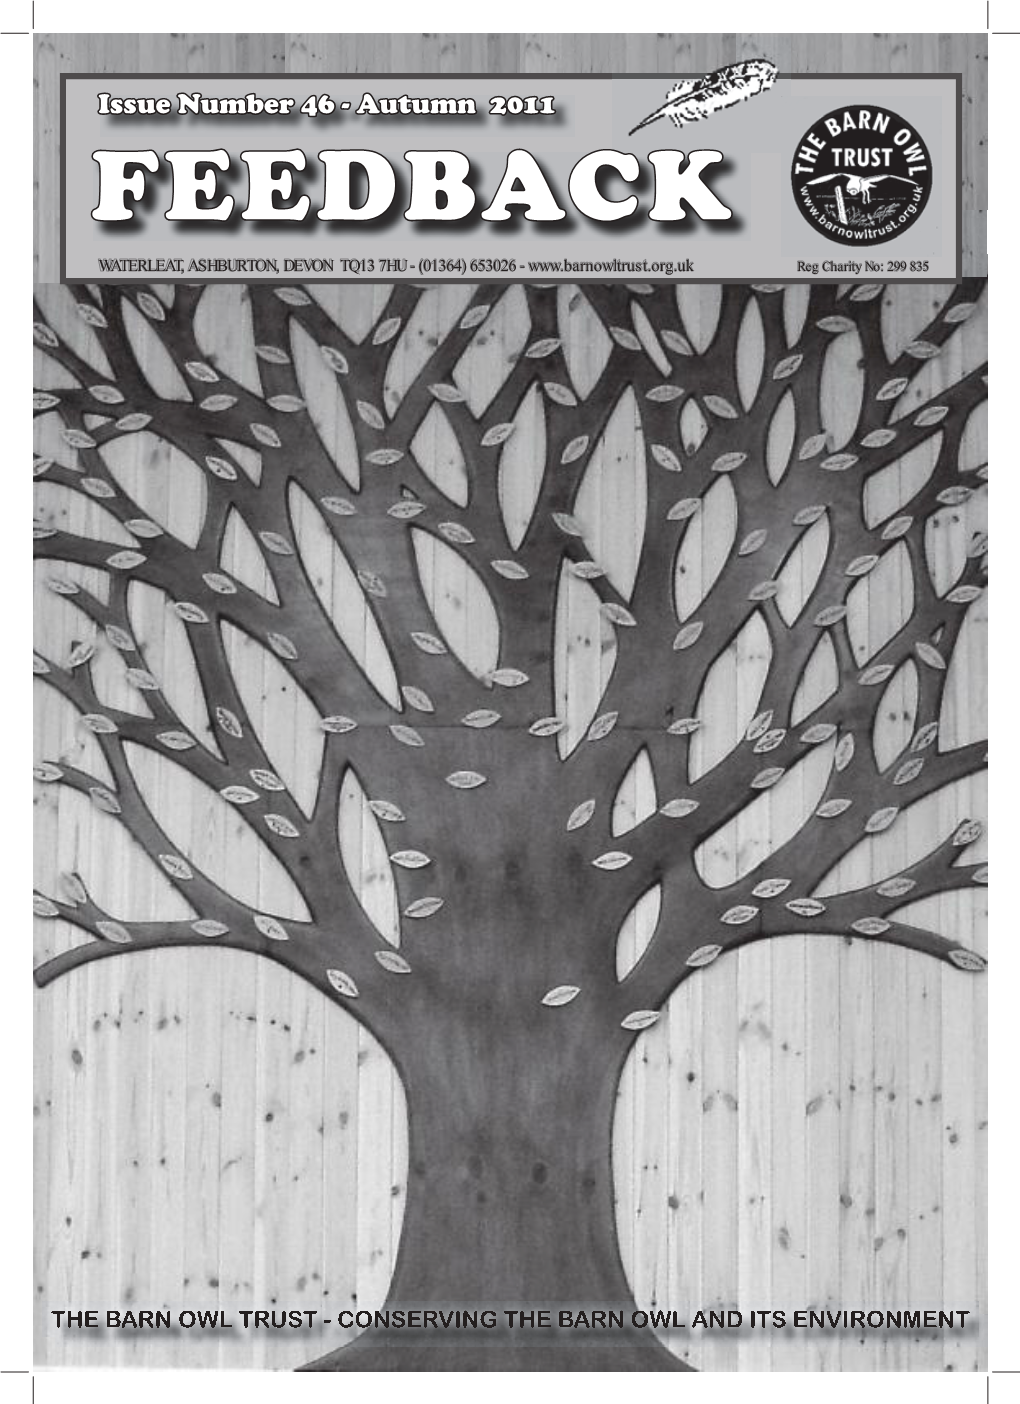 FEEDBACK 46 - AUTUMN 2011 Welcome to Feedback